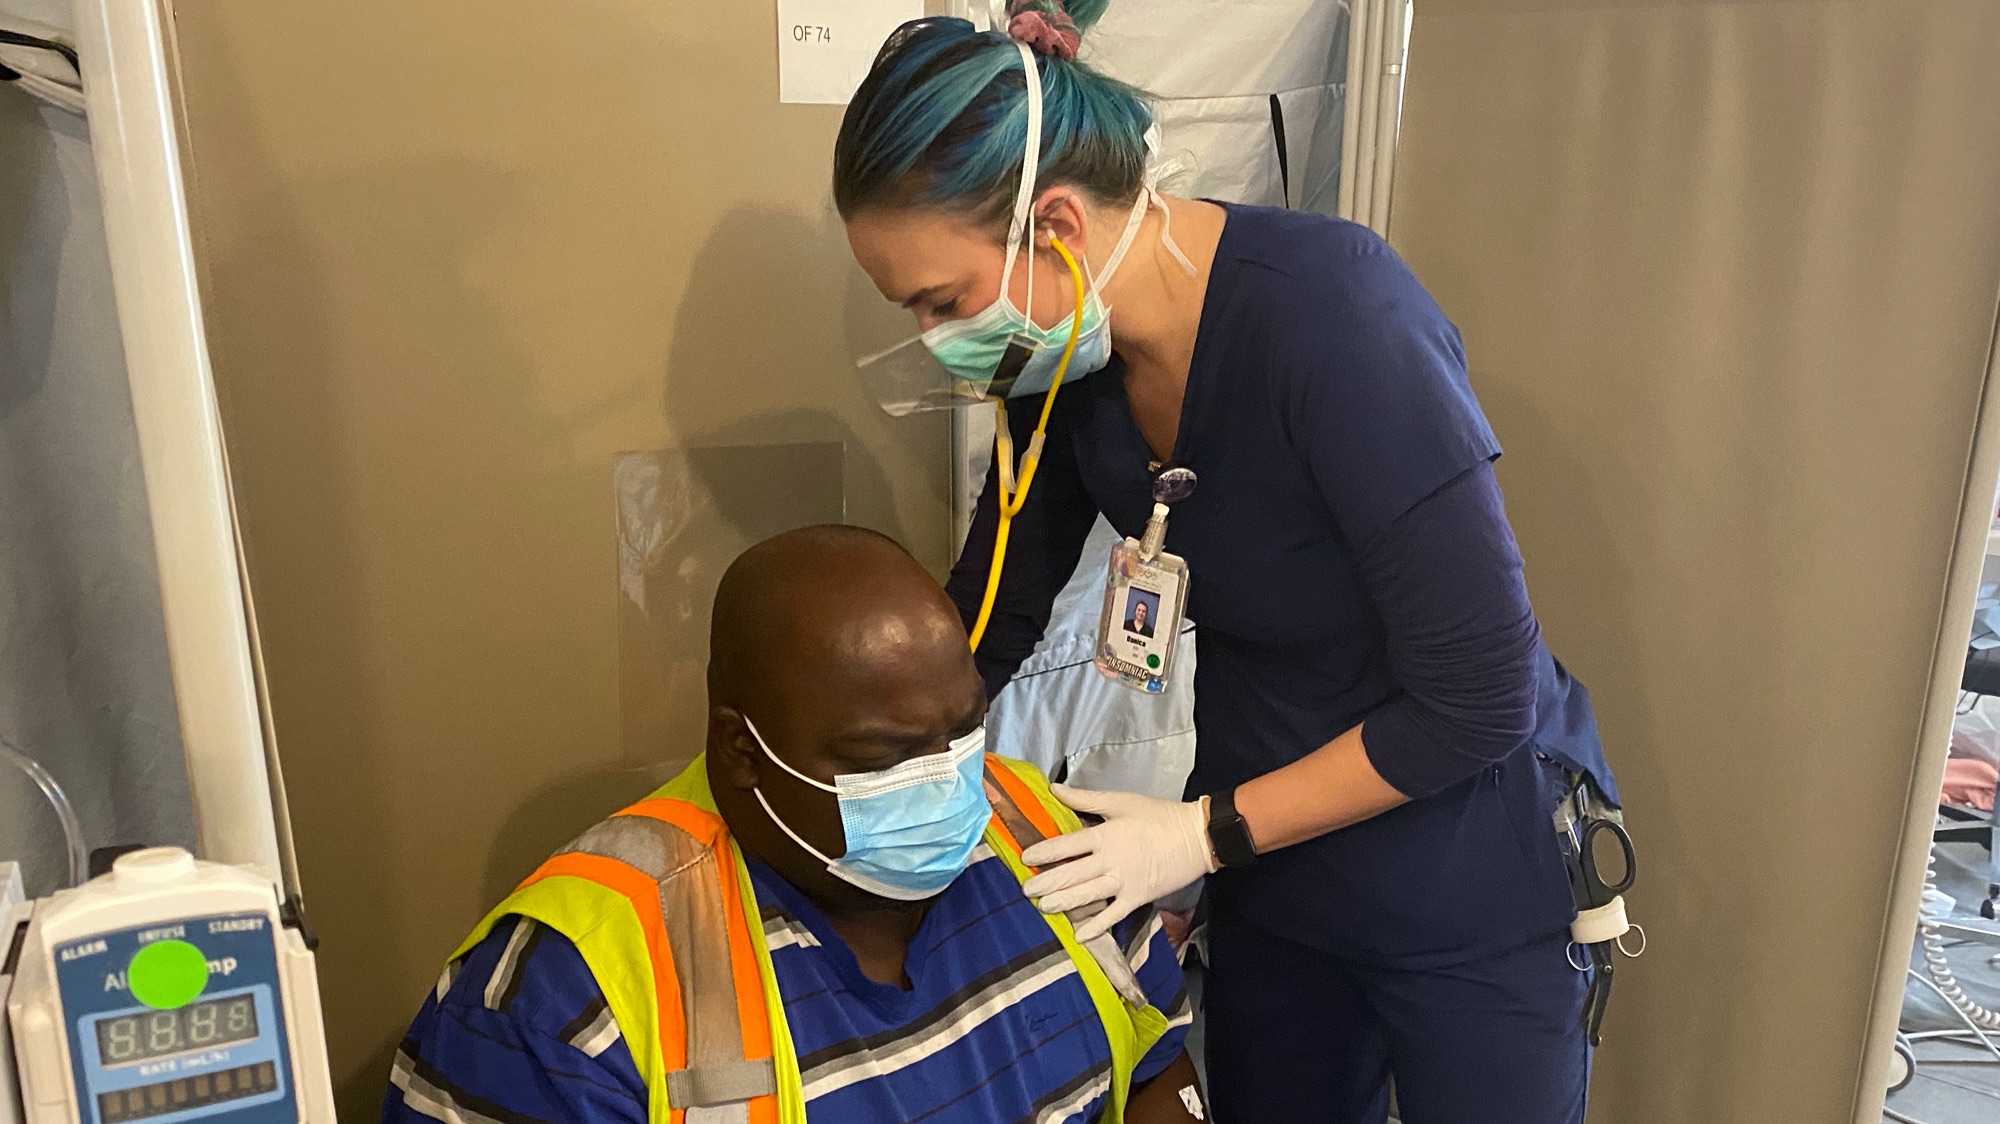 Nurse Danica Riedlinger treats a patient